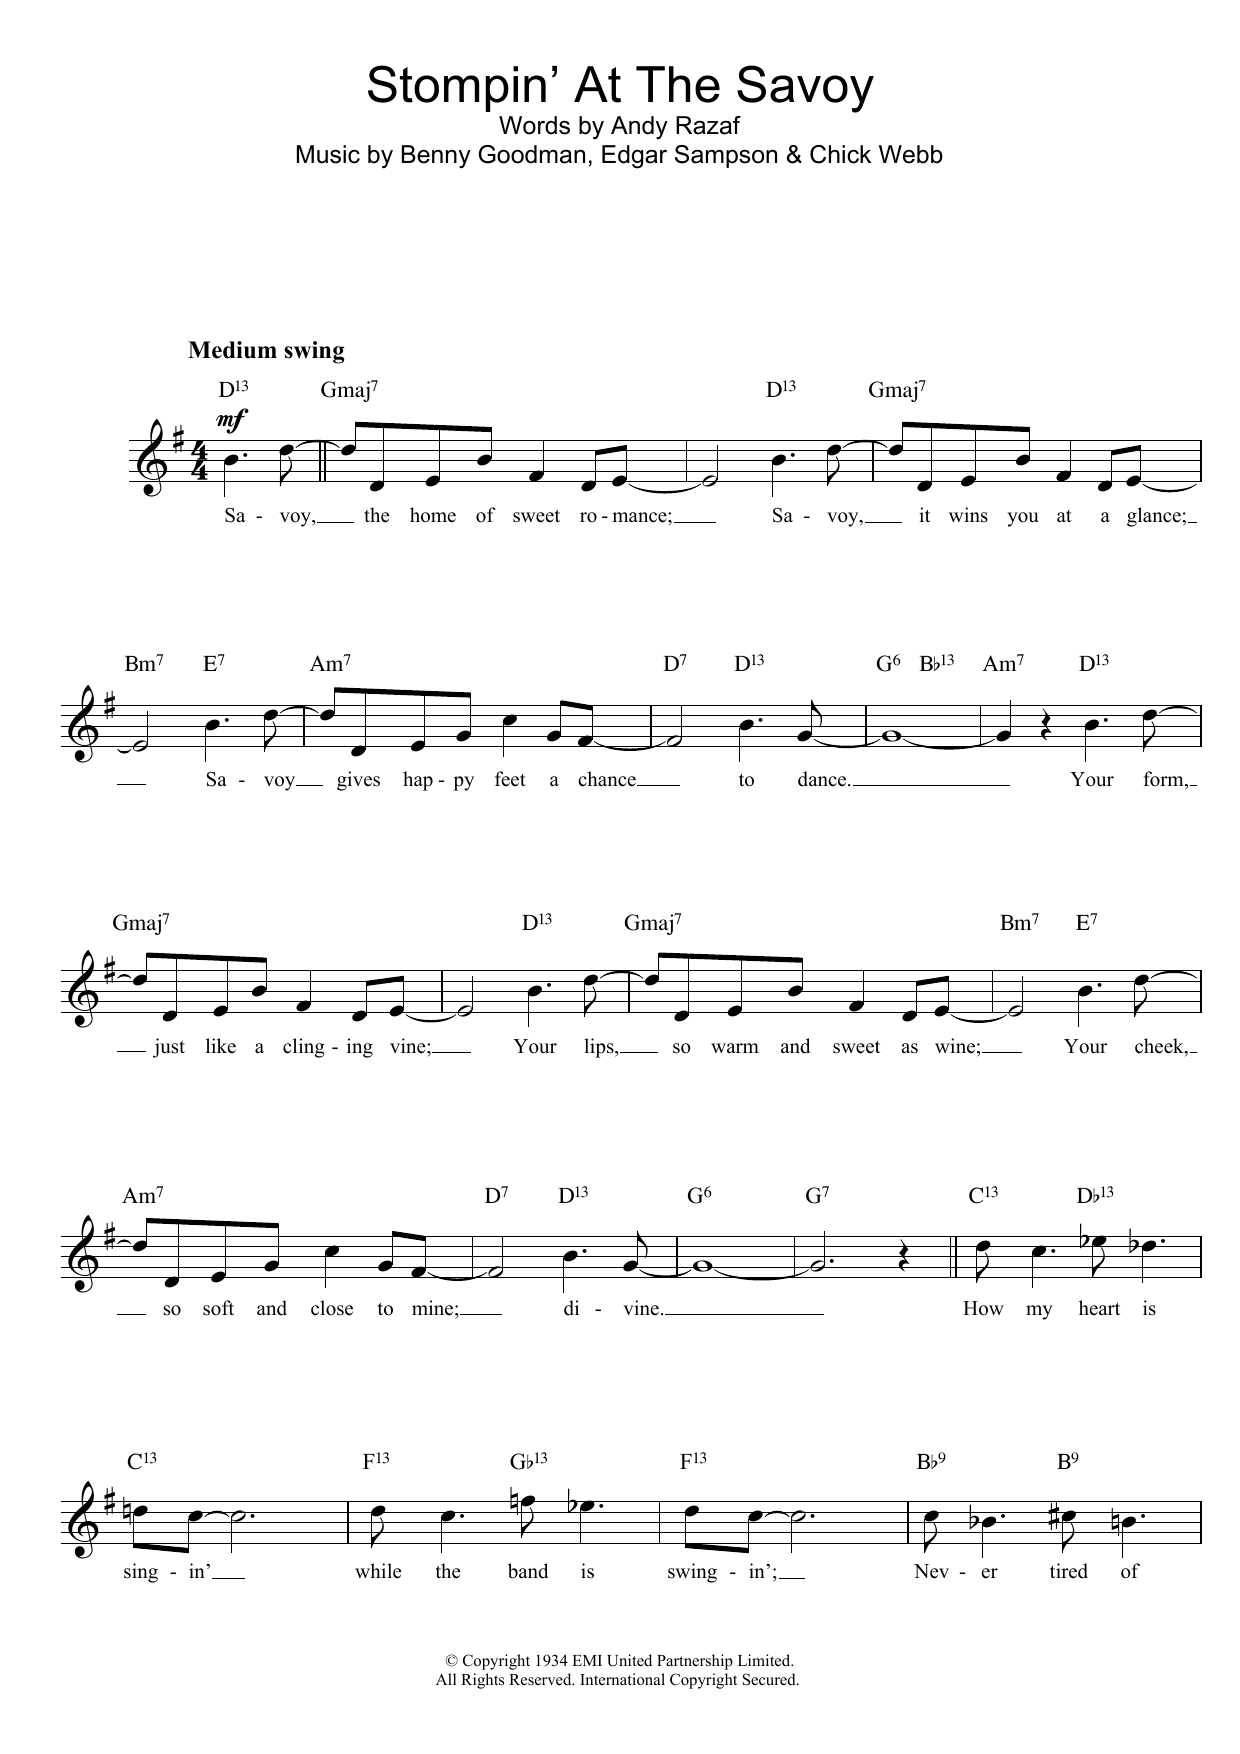 Benny Goodman Stompin' At The Savoy Sheet Music Notes & Chords for Trumpet - Download or Print PDF